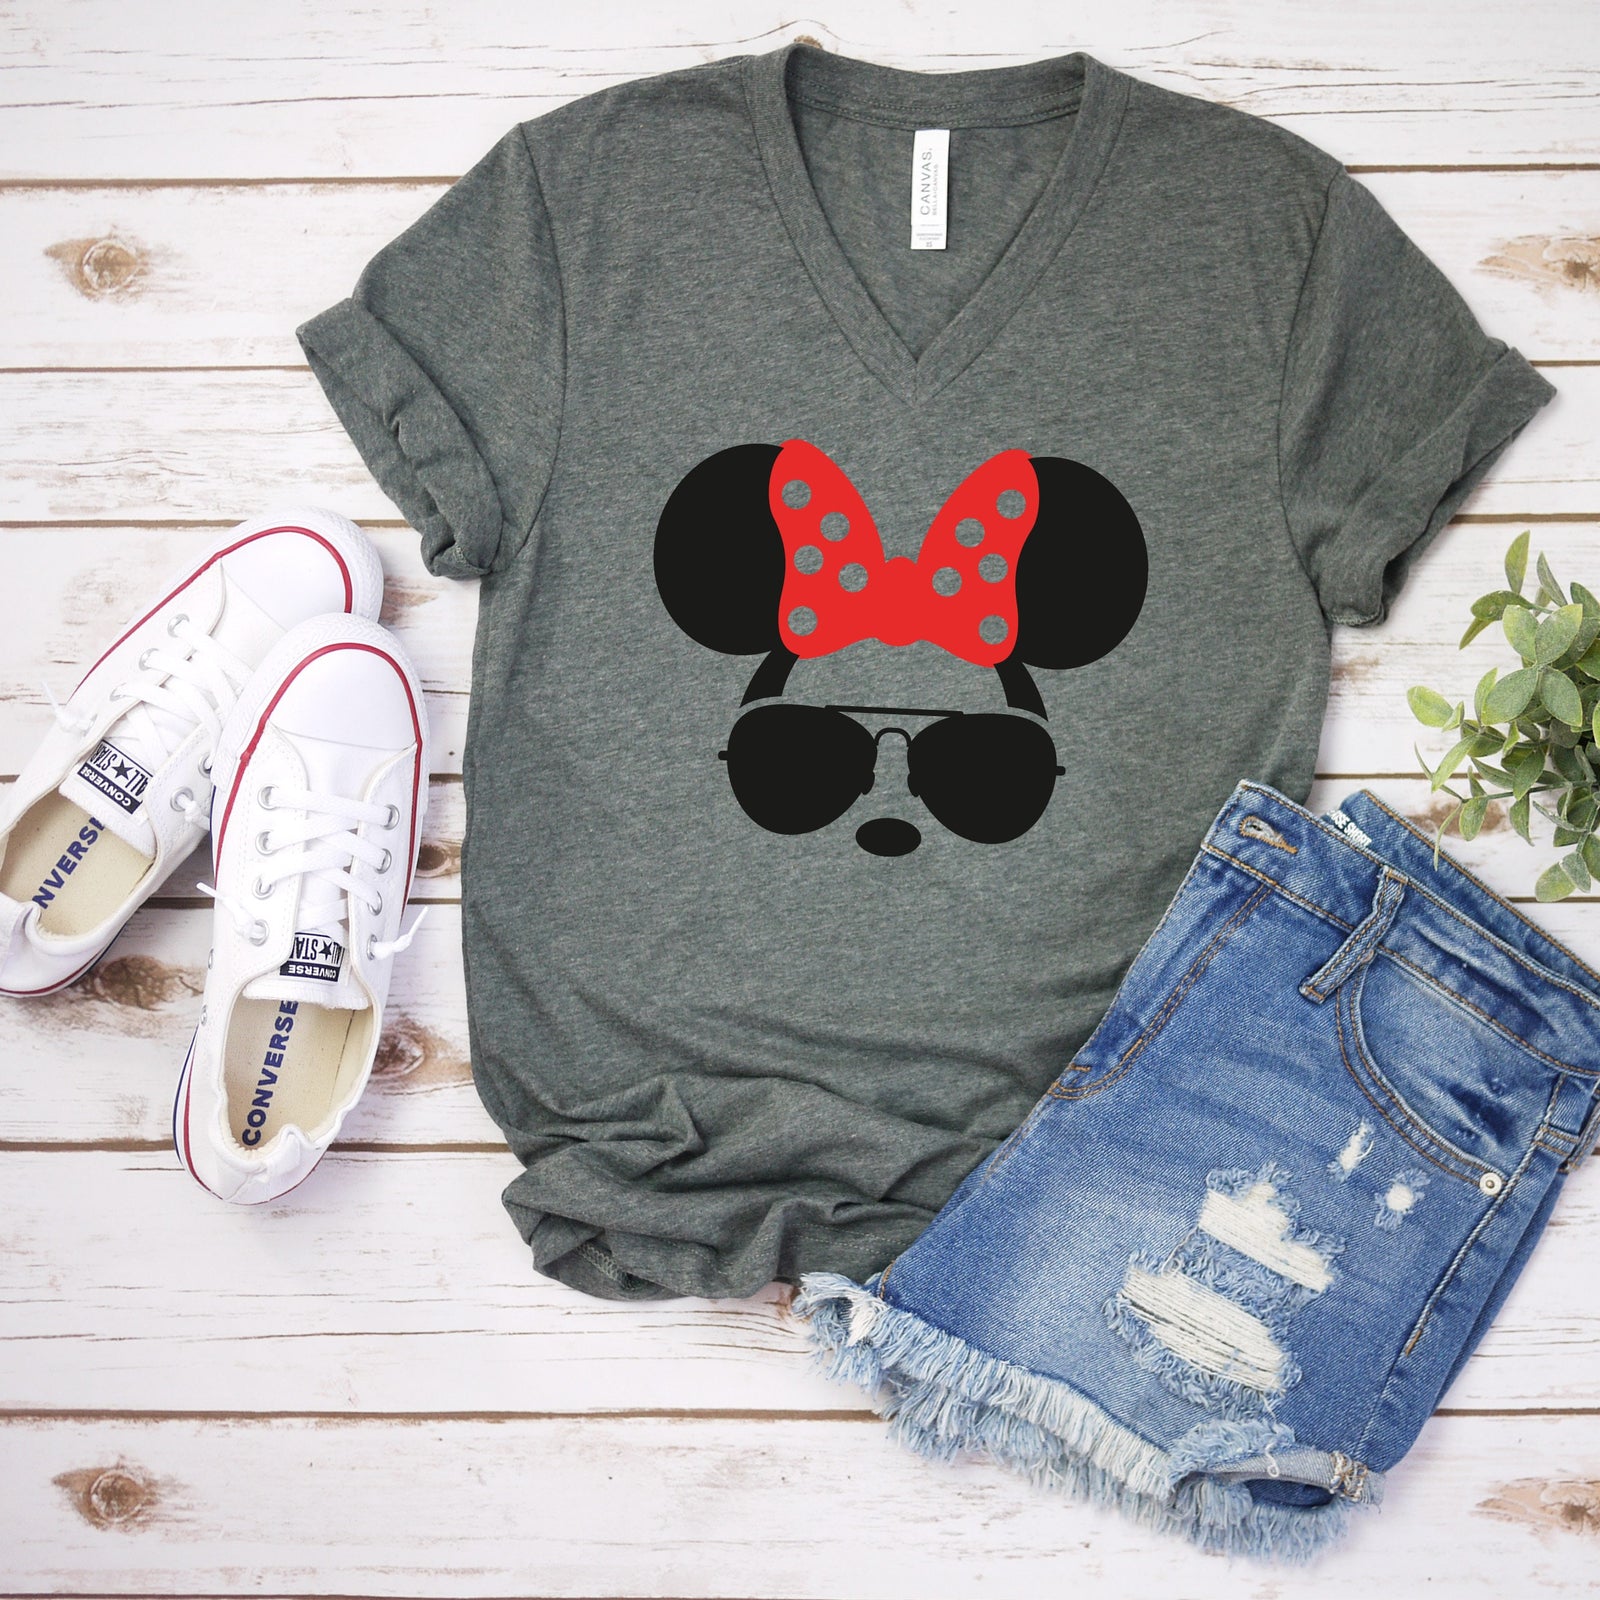 Aviator Minnie t shirt - Disney Trip Matching Shirts - Minnie Mouse T Shirt - Cute Minnie Shirt - Minnie with Sunglasses